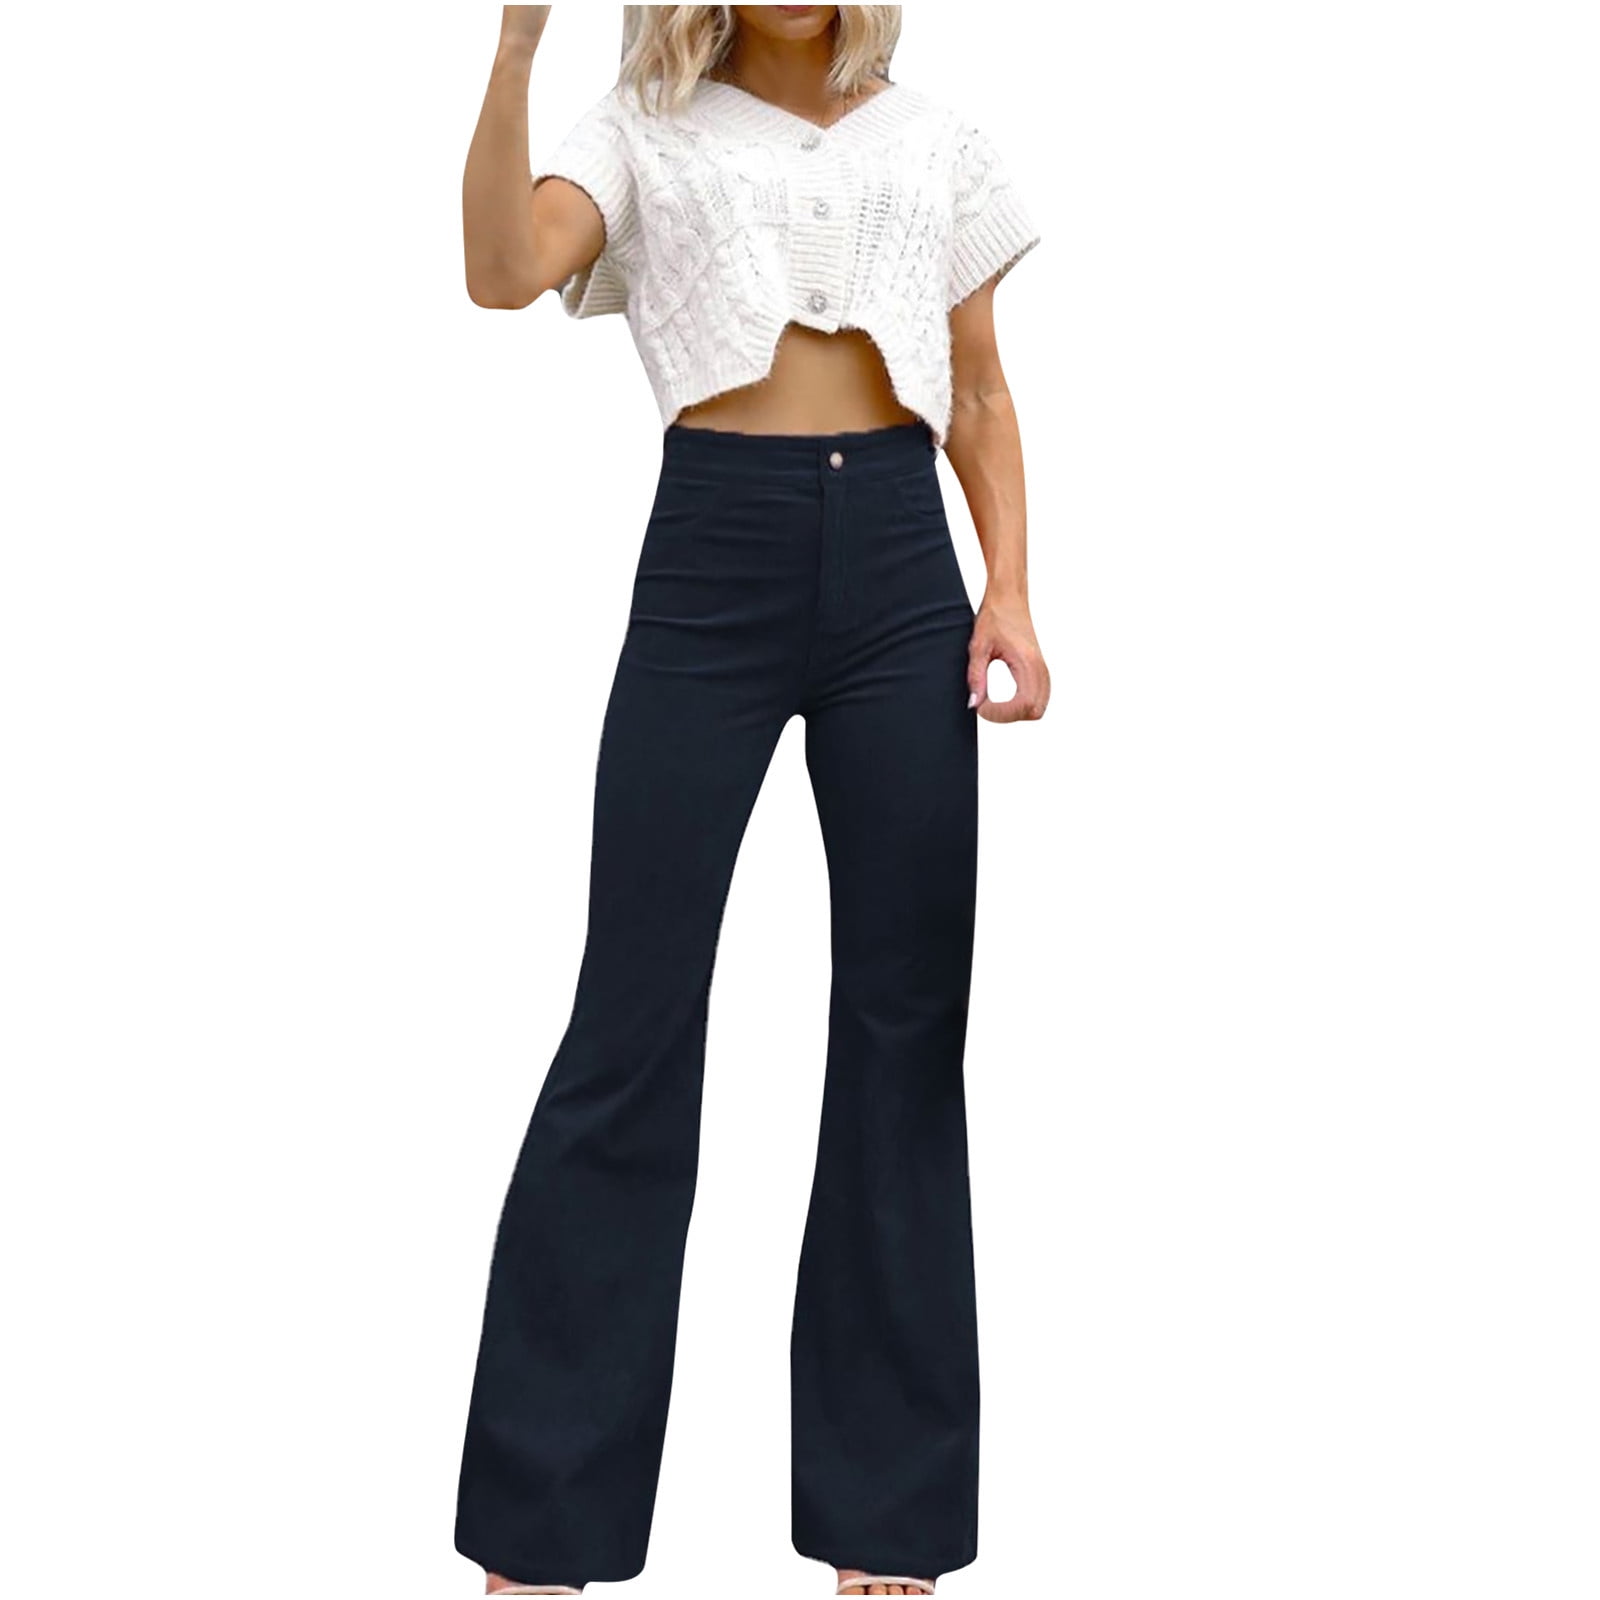 Corduroy Pants for Women High Waist Button Flare Pants Business Bell ...